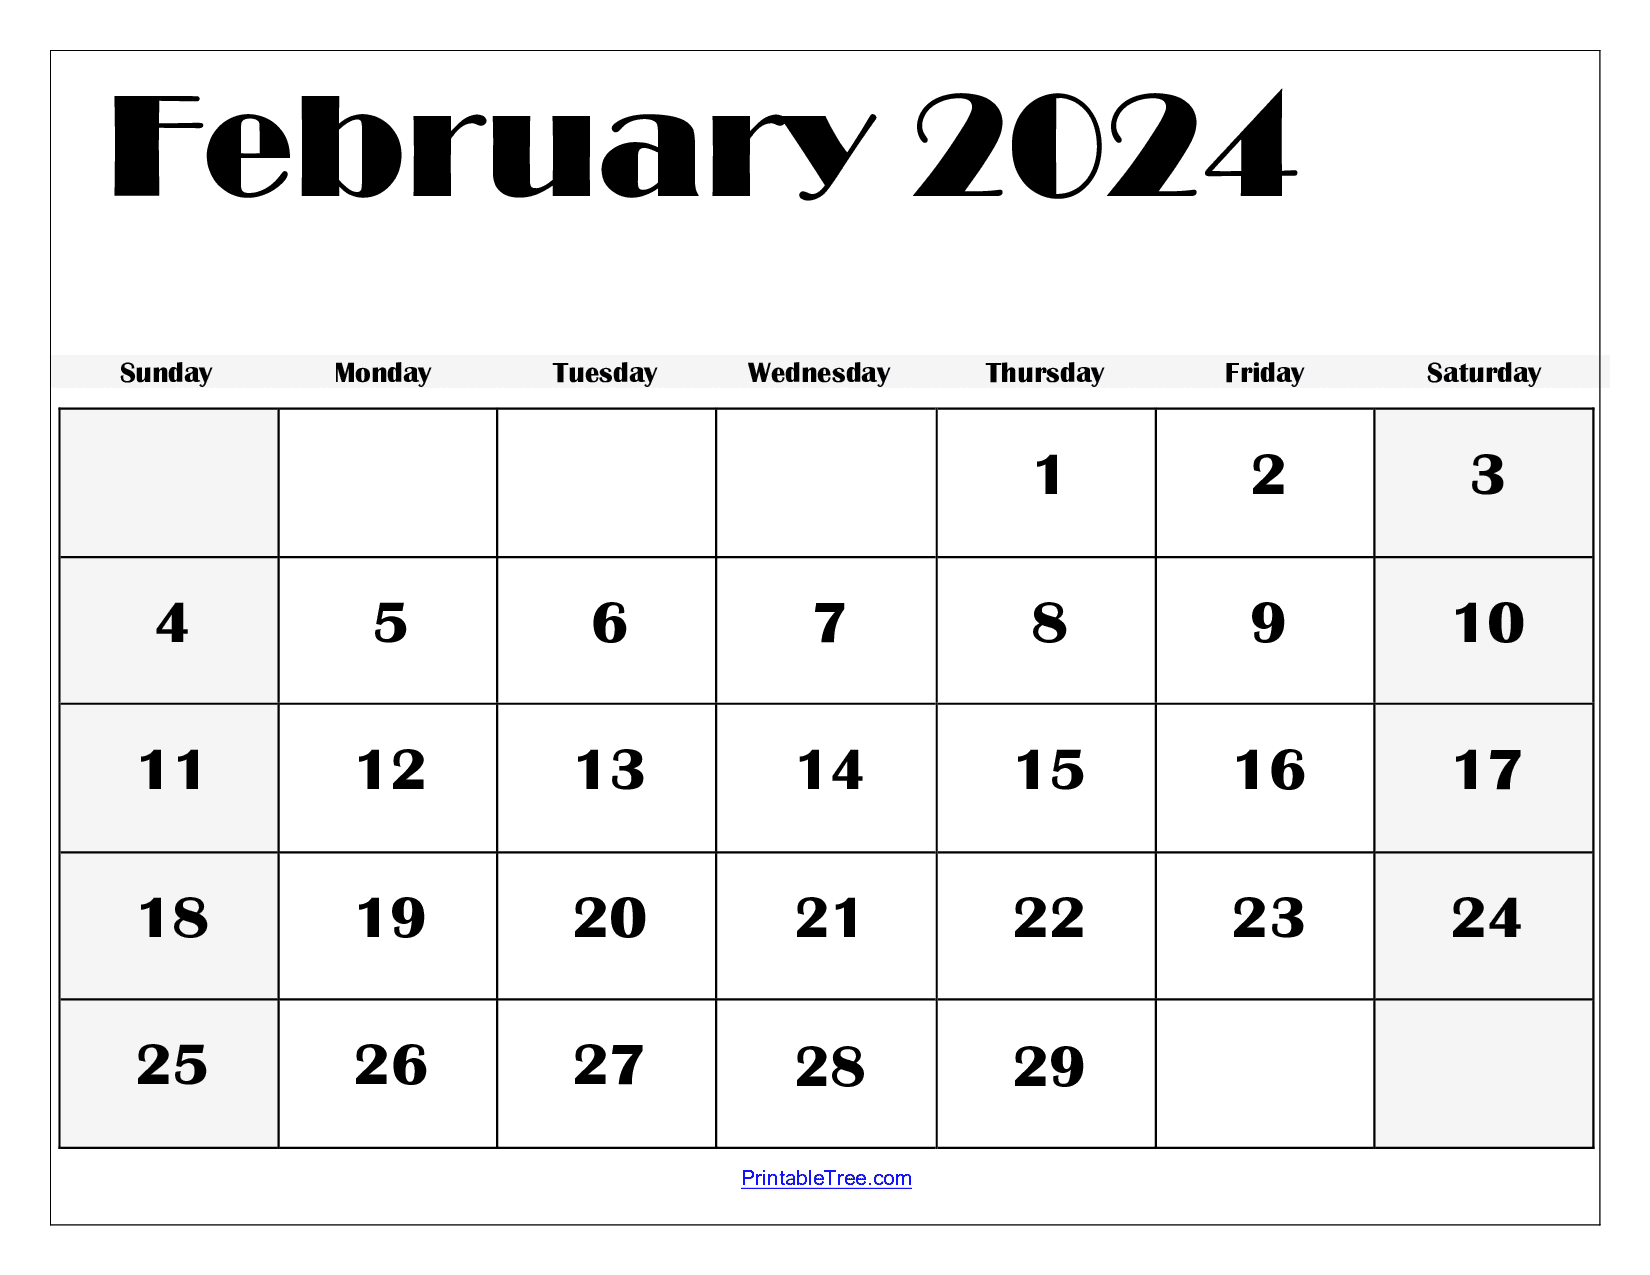 February 2024 Calendar Printable Pdf Template With Holidays for February Calendar Printable 2024